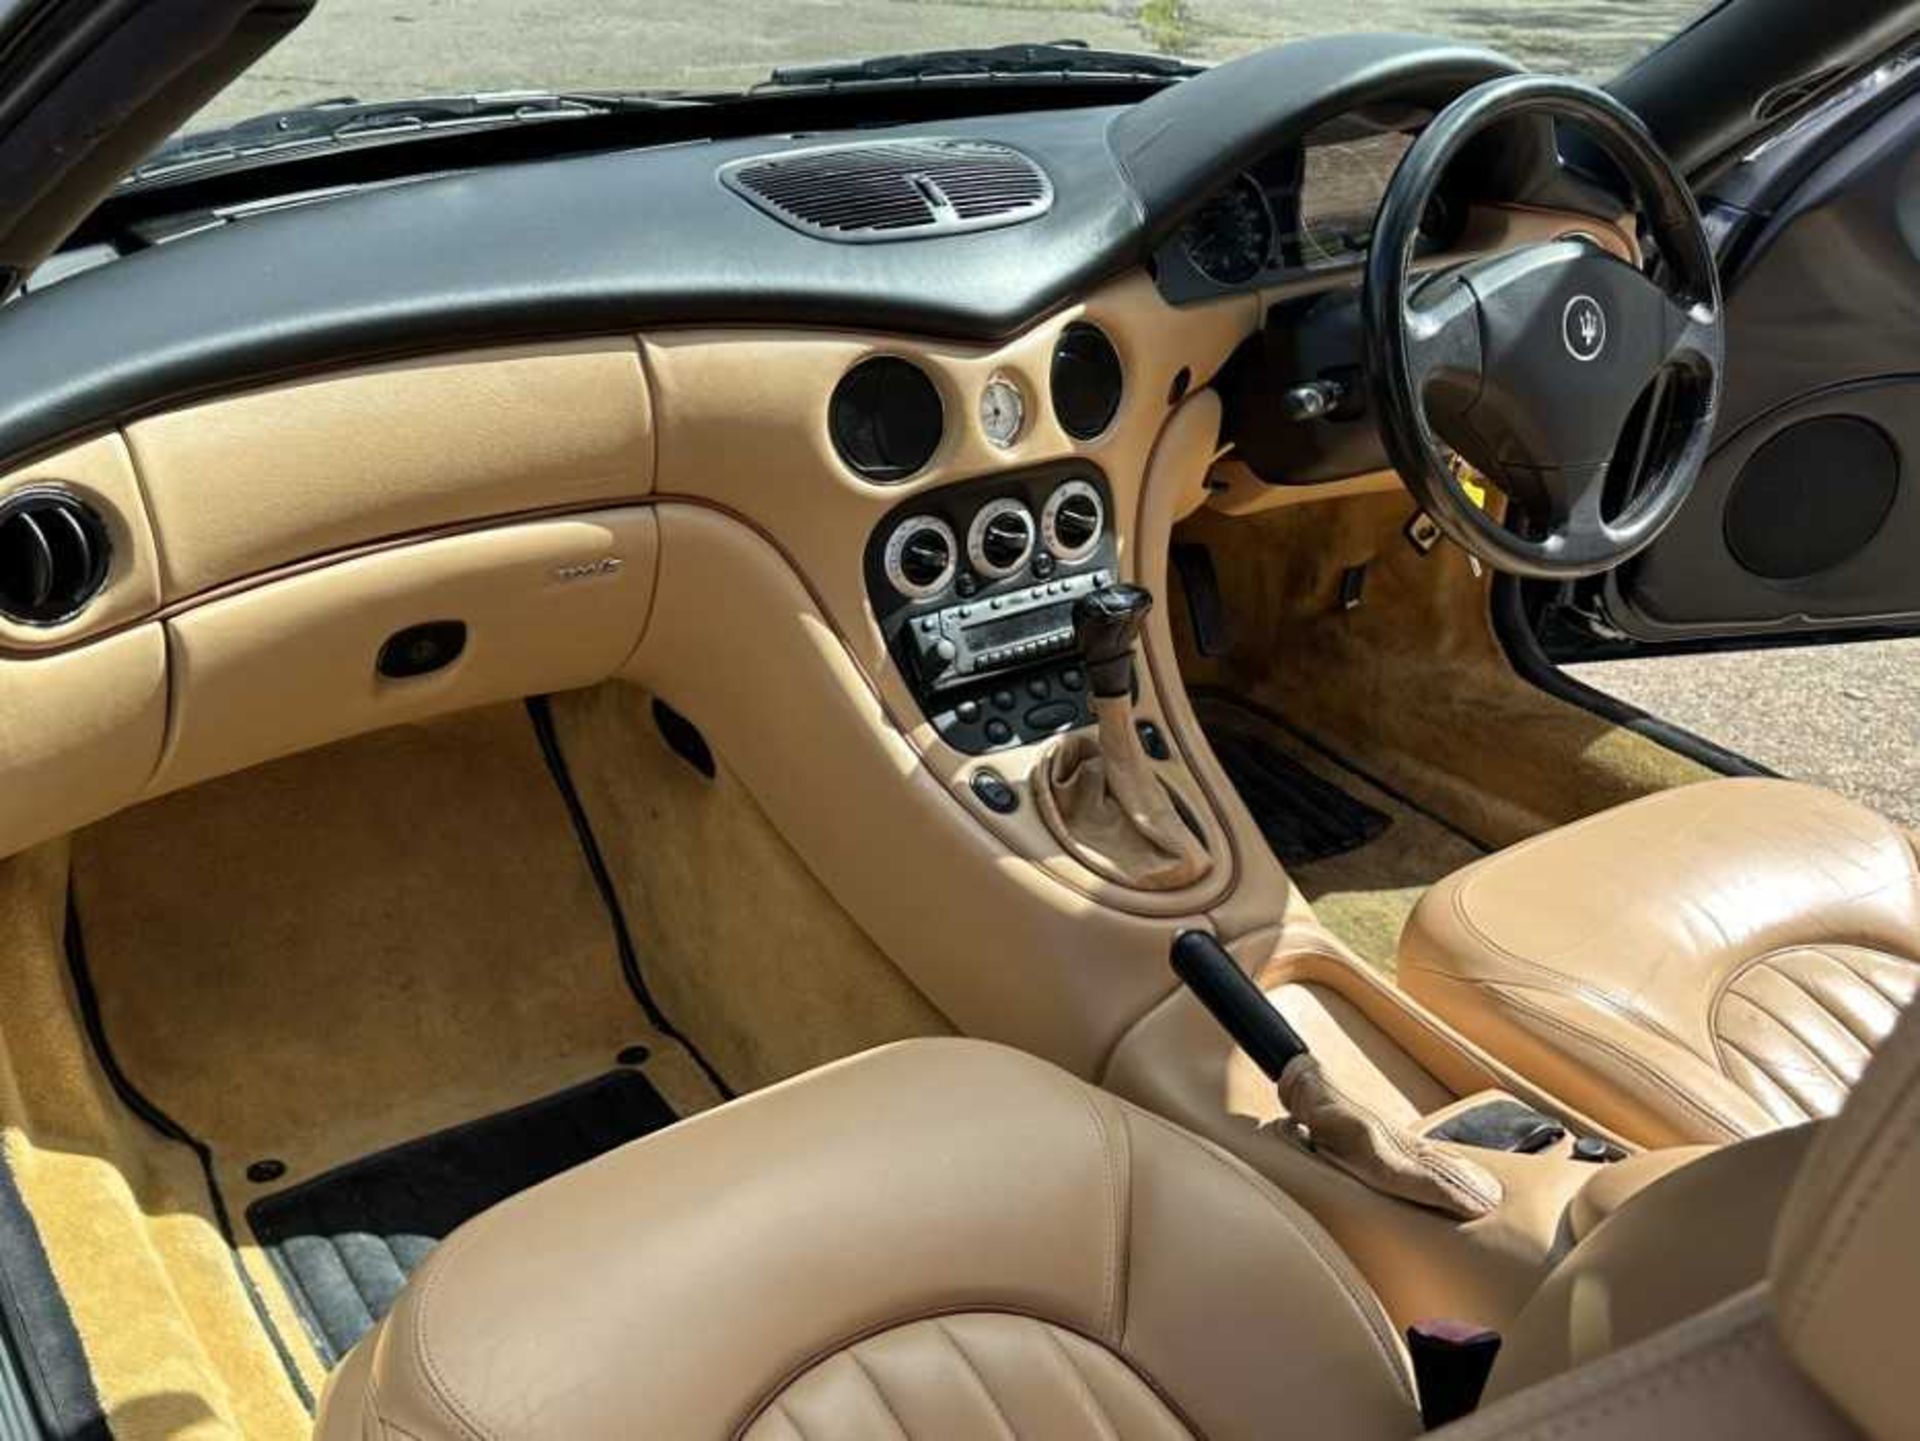 2000 Maserati 3200GT coupe, 3.2 V8, automatic, reg. no. M4 SXE - Image 14 of 24